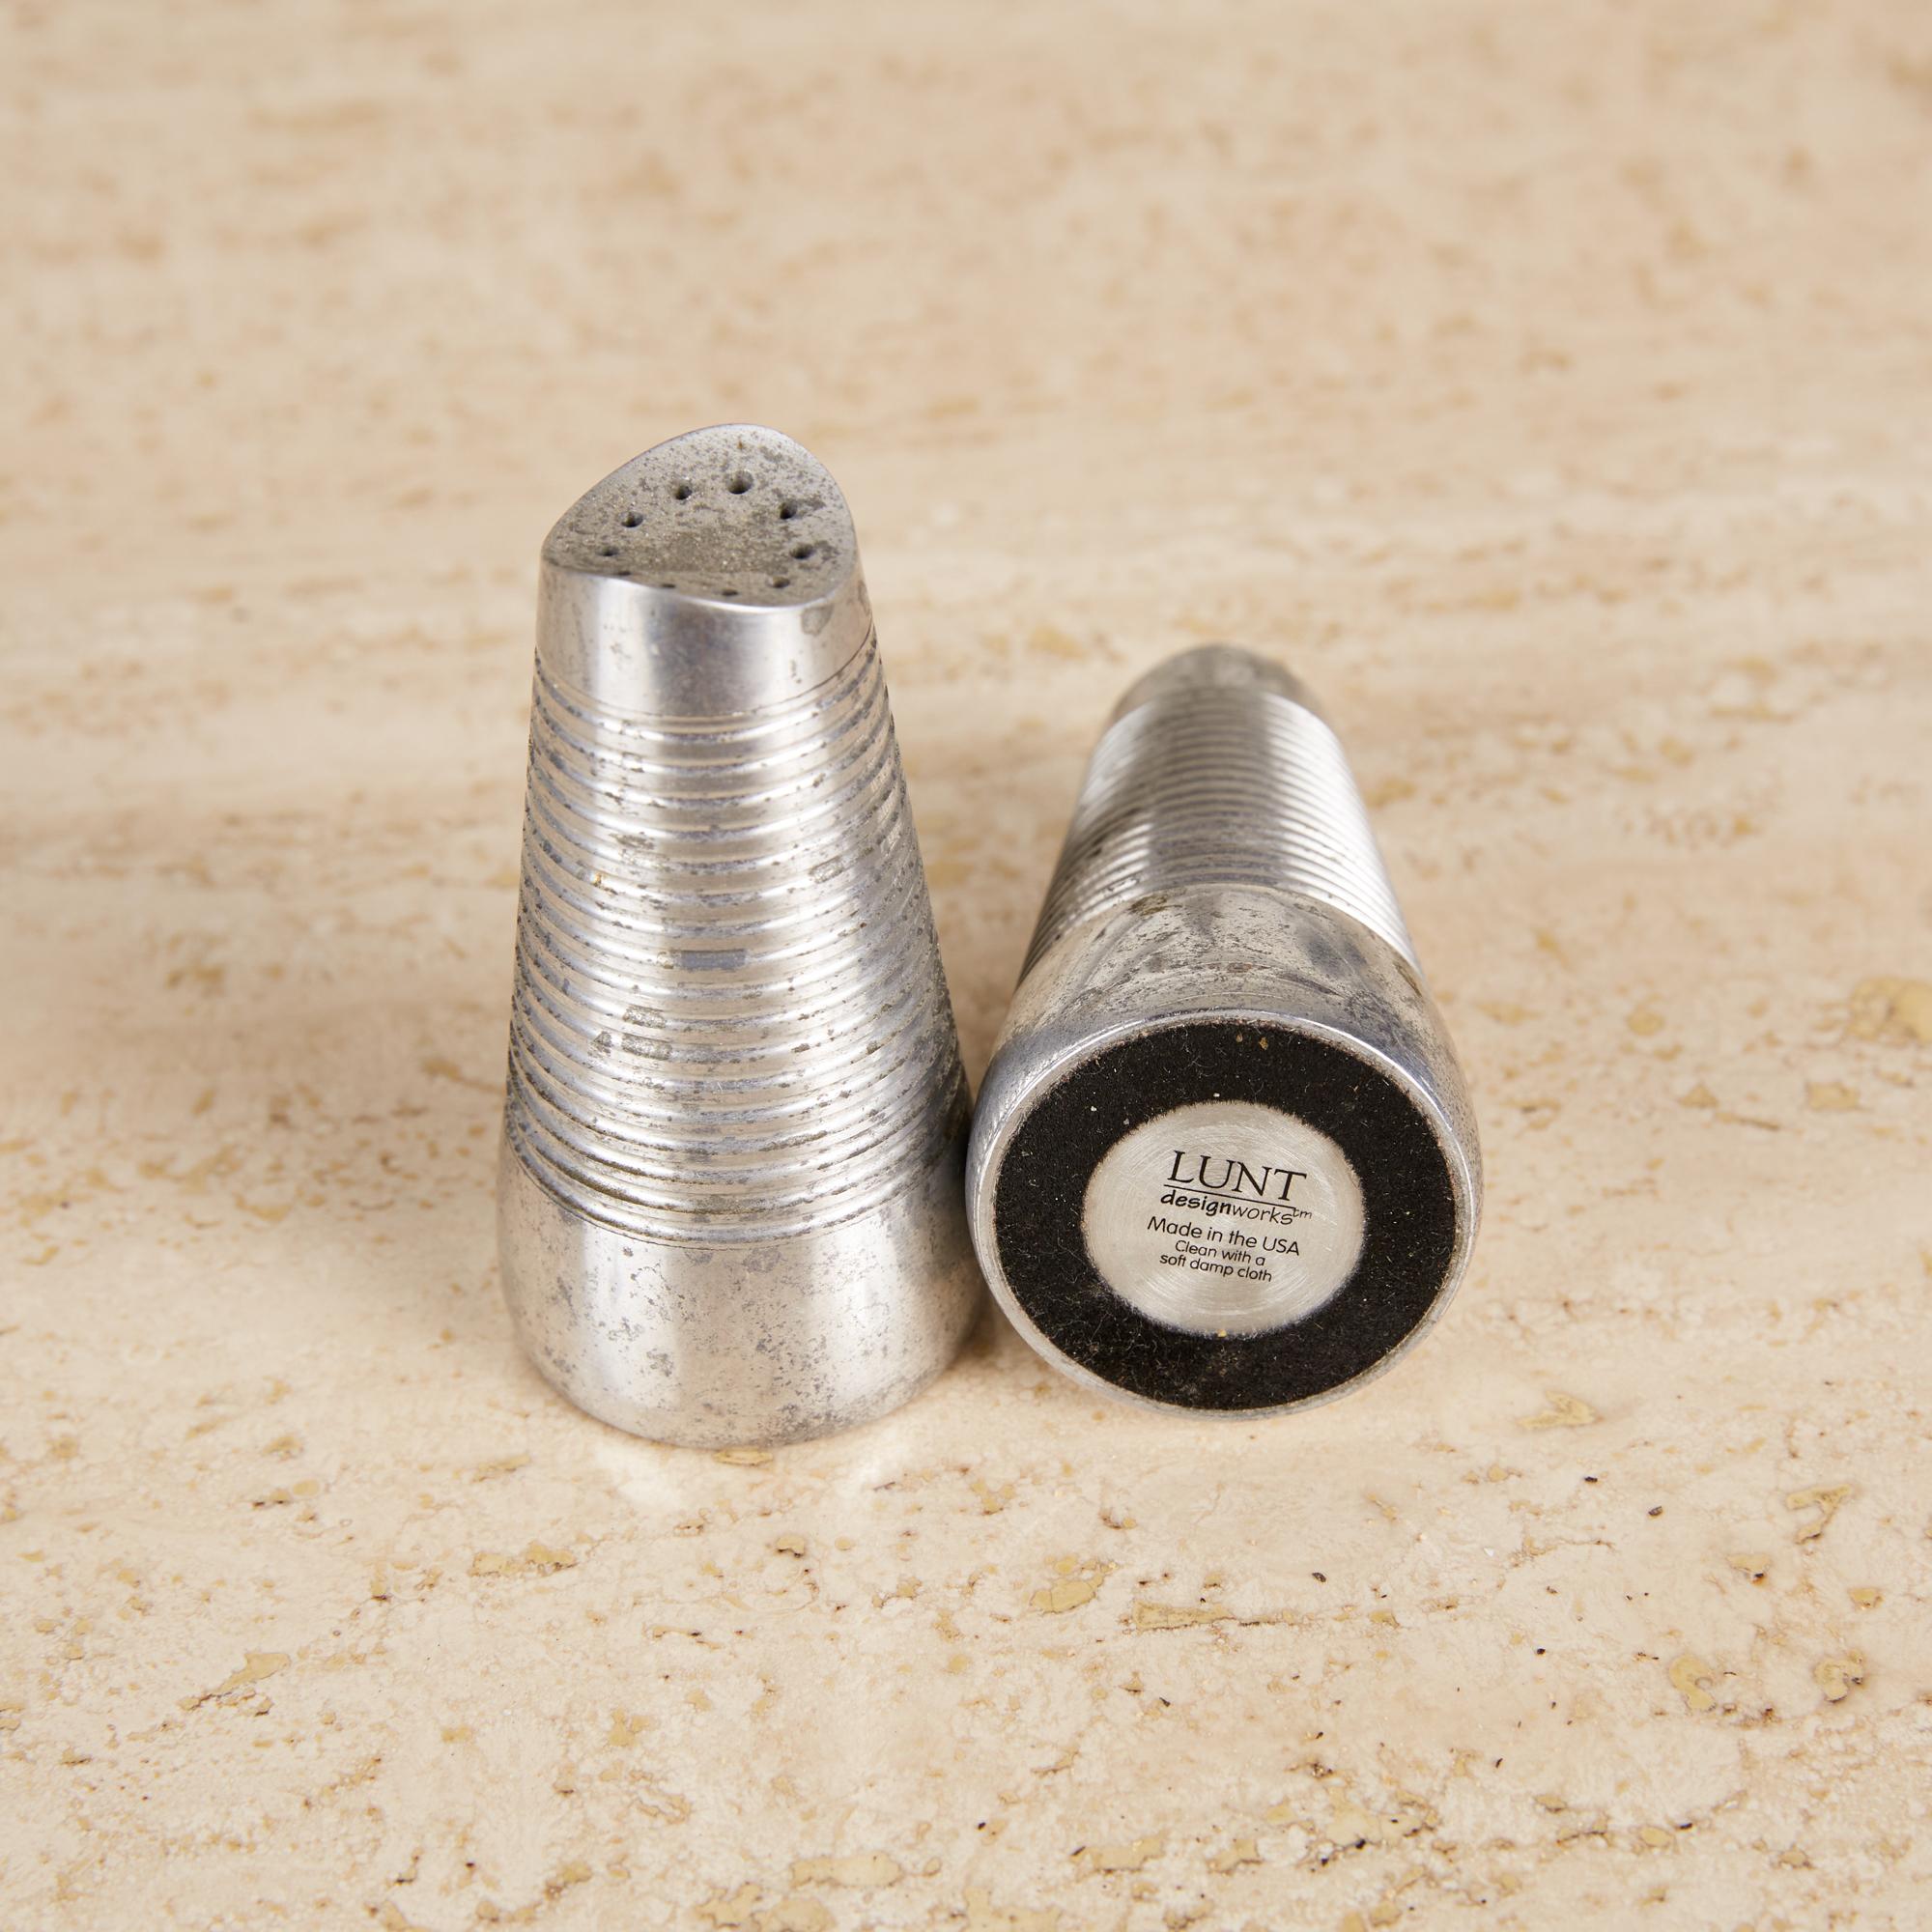 20th Century Lunt Design Works Salt & Pepper Shakers For Sale